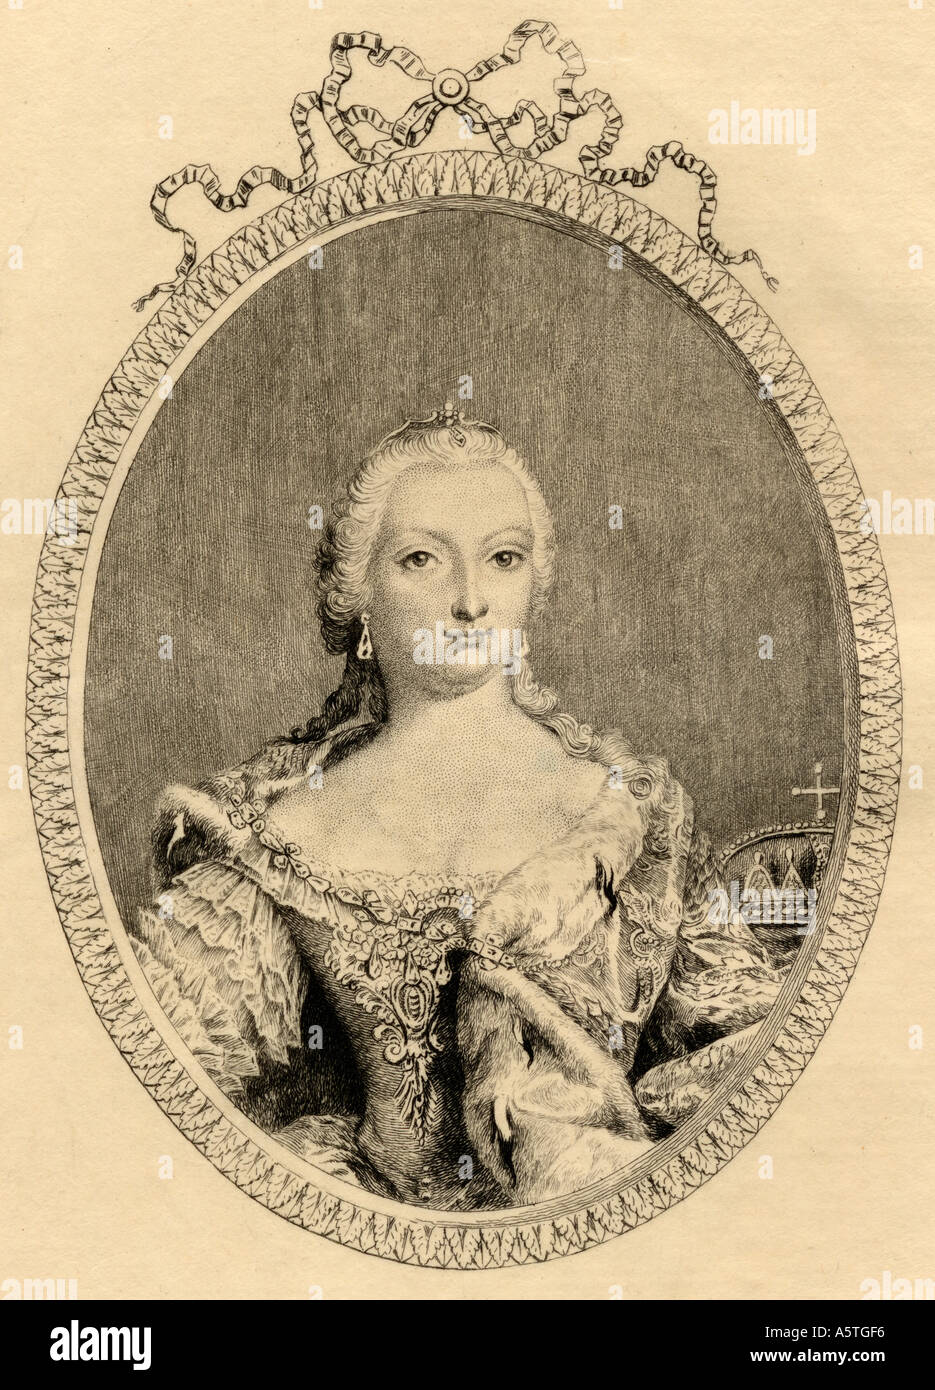 Maria Theresa Walburga Amalia Christina, 1717 - 1780.  Ruler of the Habsburg dominions. Stock Photo